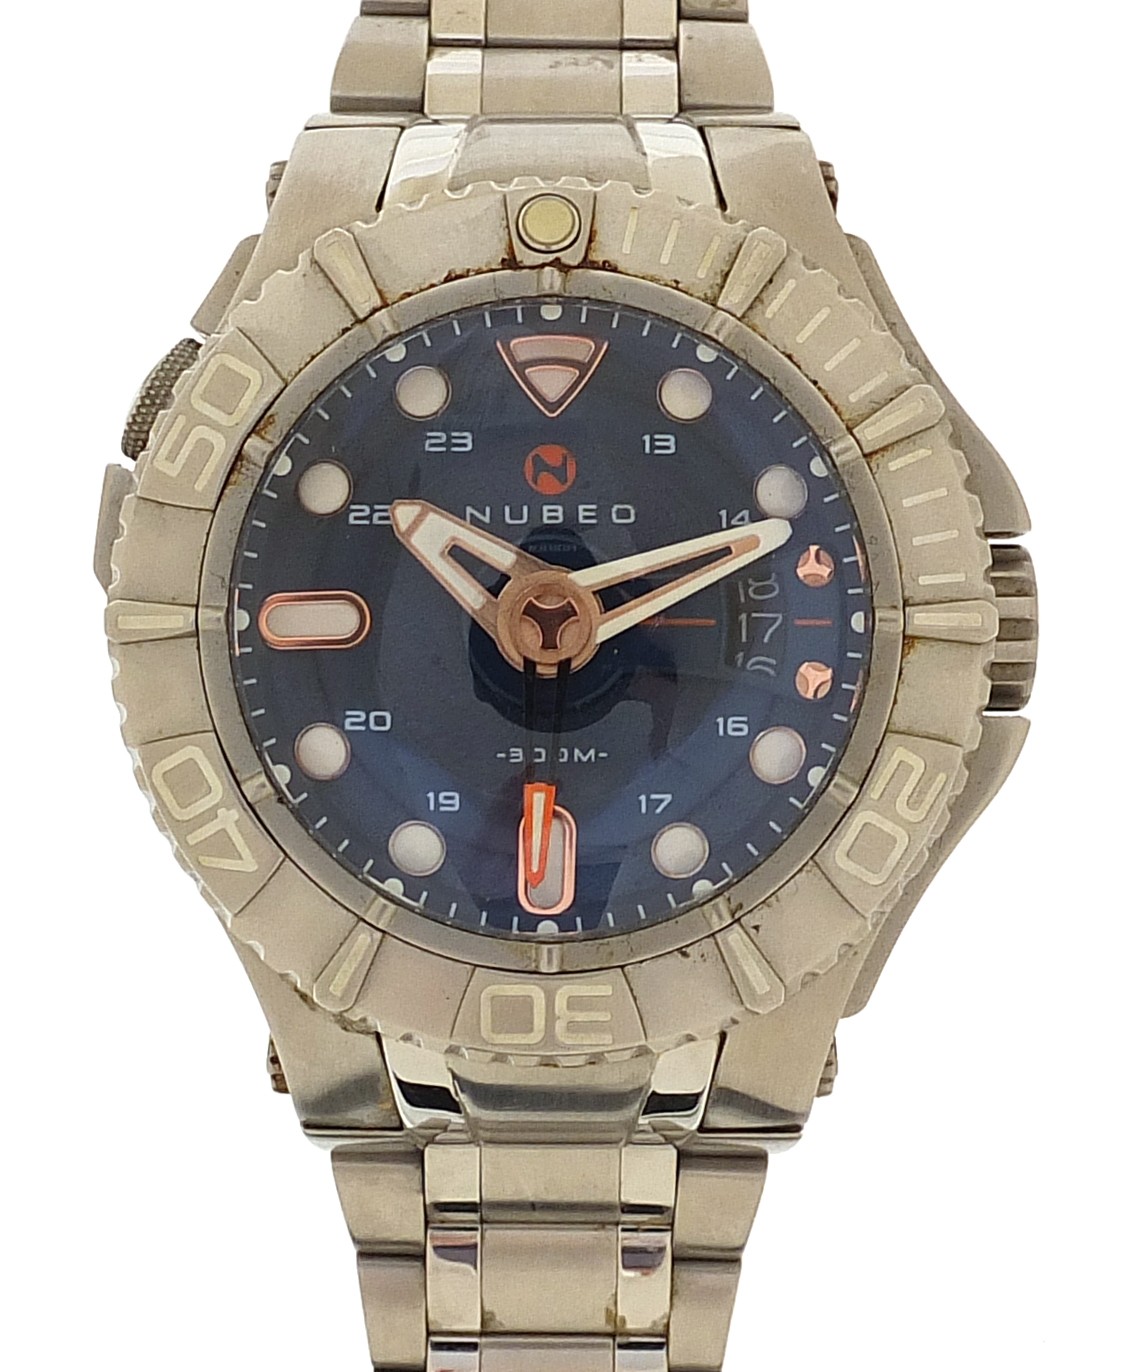 Nubeo gentlemen's WR 300 metre automatic wristwatch with box and paperwork, 50mm in diameter